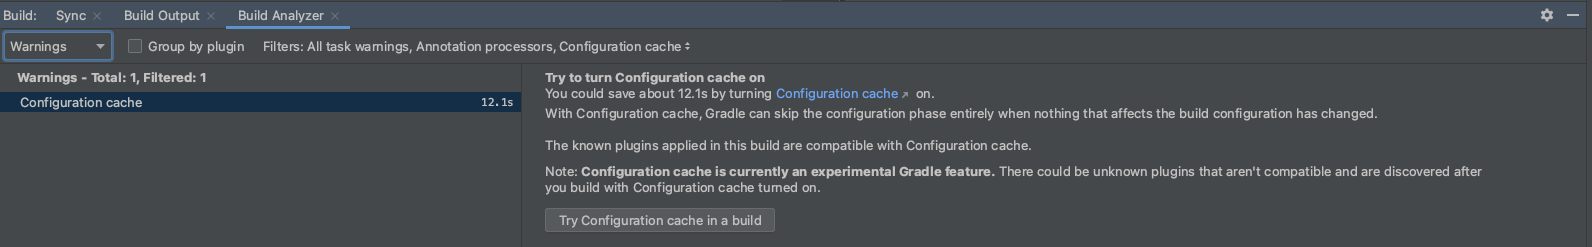 Informasi cache konfigurasi di Build Analyzer